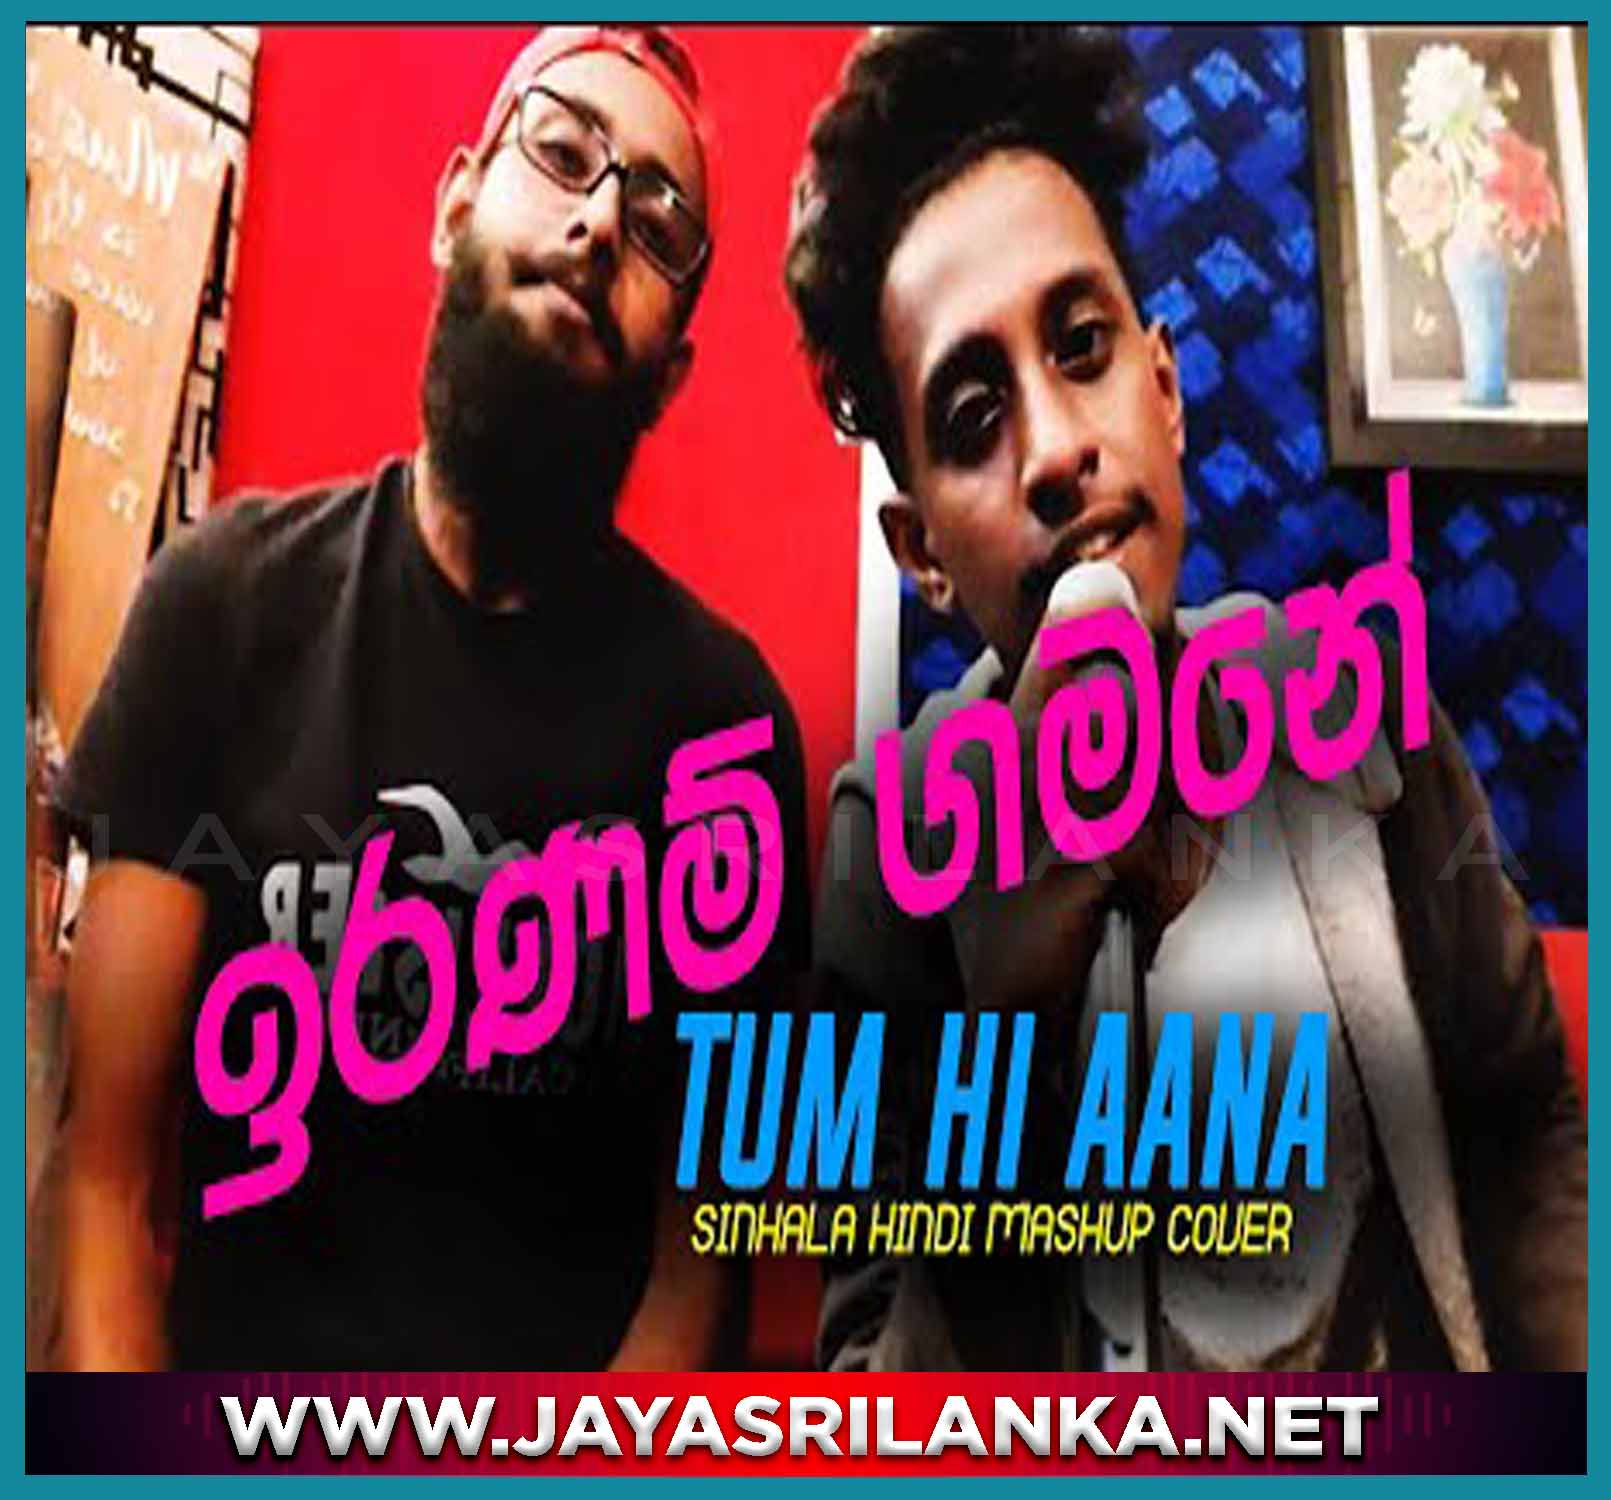 Iranam Gamane ft Tum Hi Aana Sinhala Hindi Mashup Cover